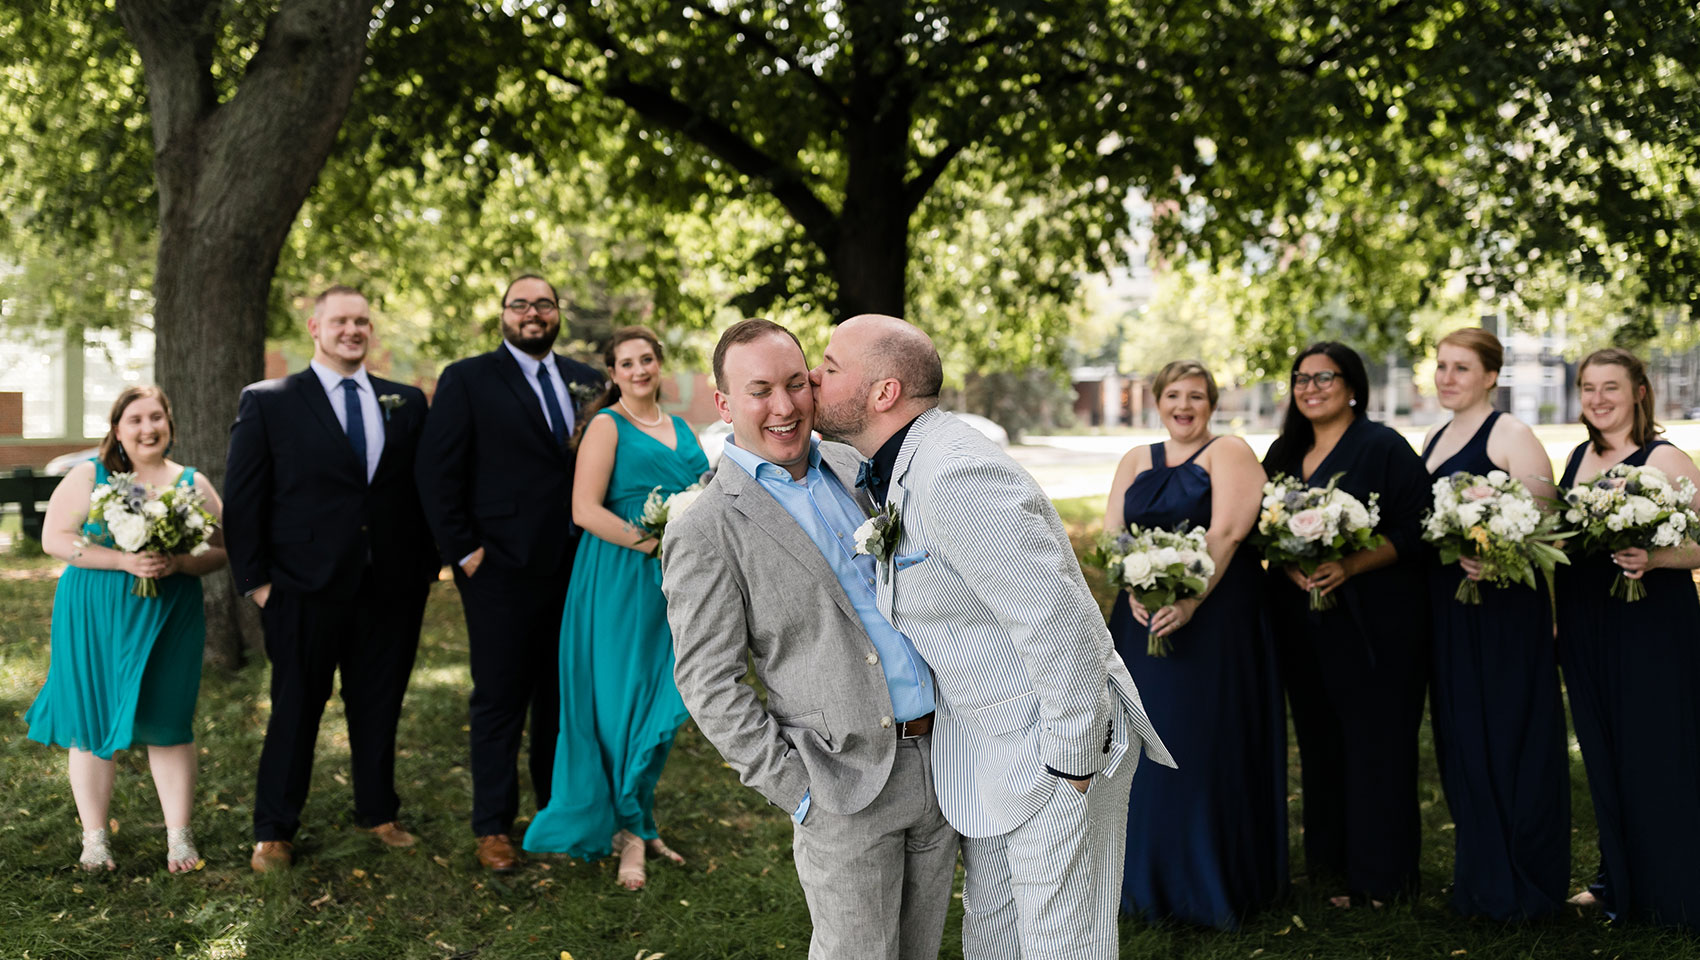 Wedding couple kissing